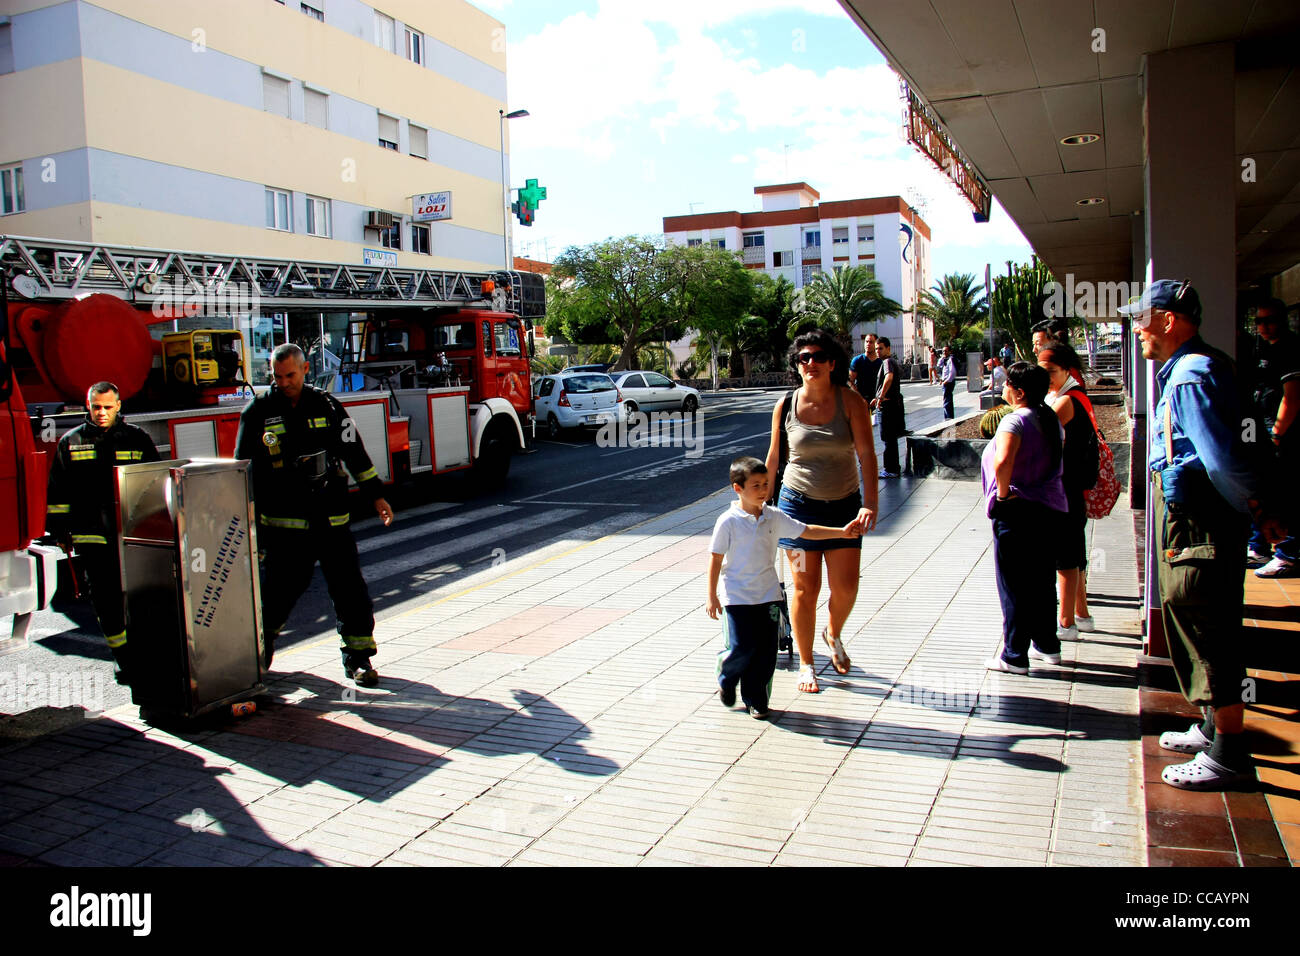 People watching firemen at work in San Fernando de Maspalomas, Gran Canaria Stock Photo